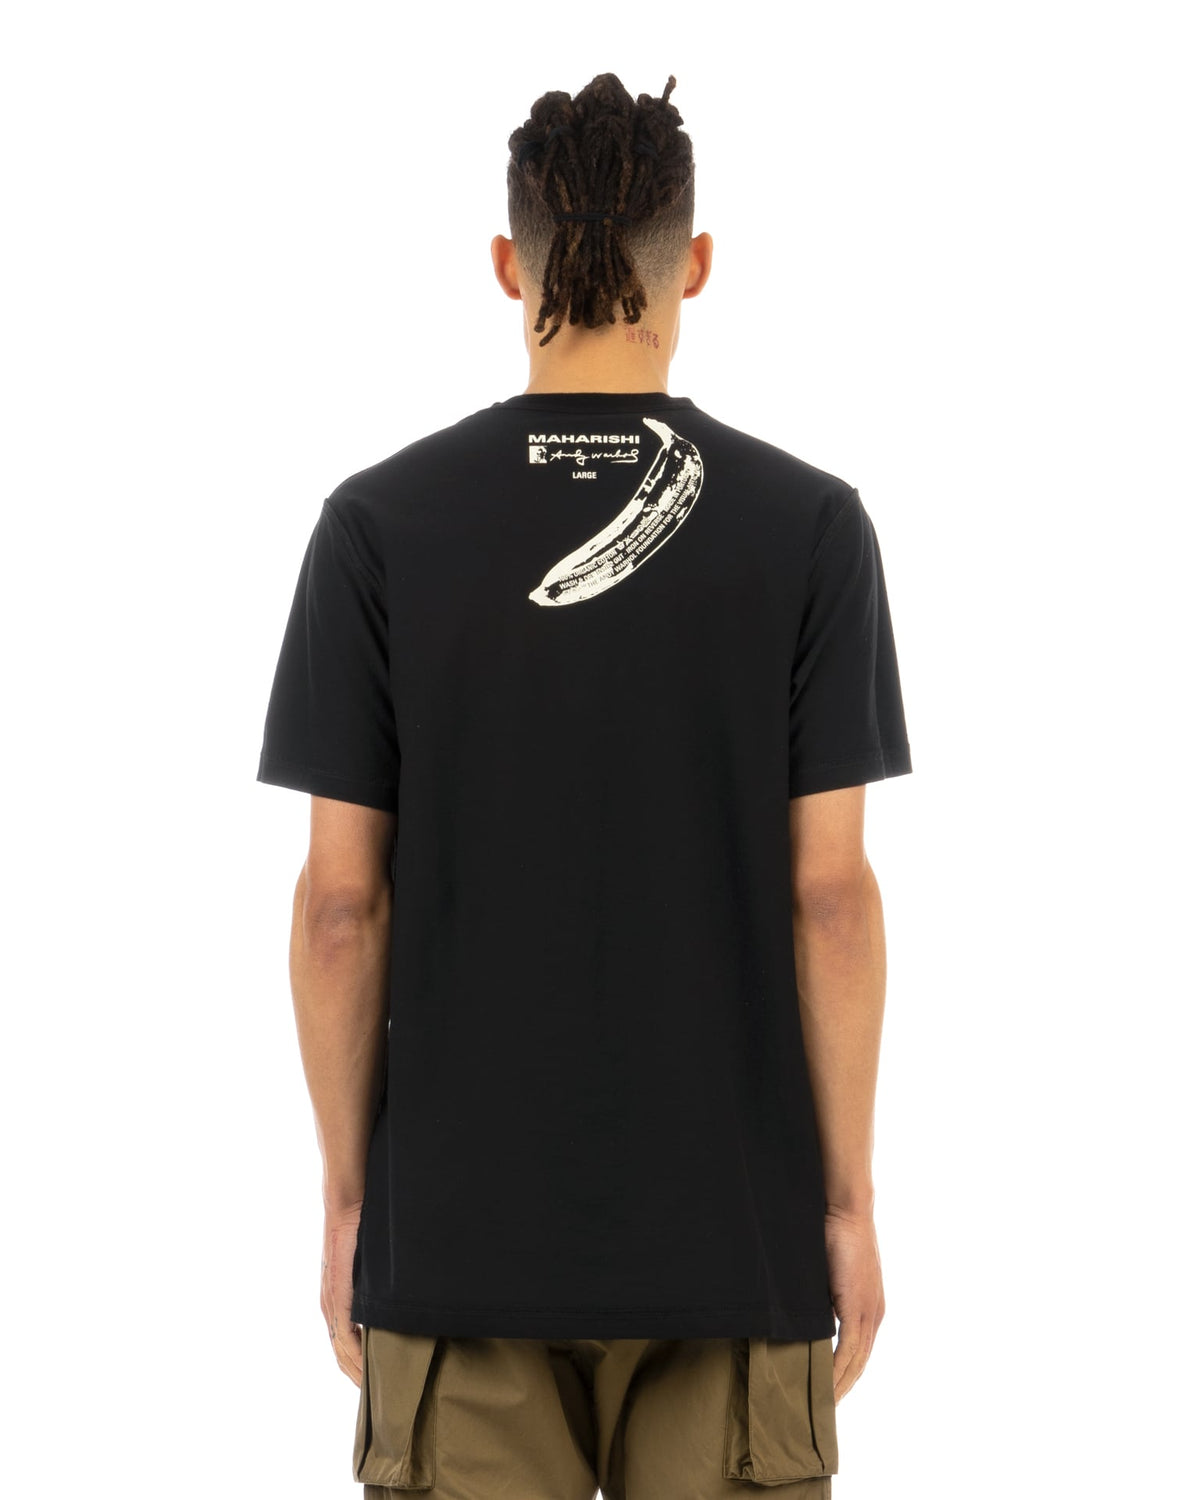 maharishi | Warhol DPM Series 3 T-Shirt Black 9646 - Concrete